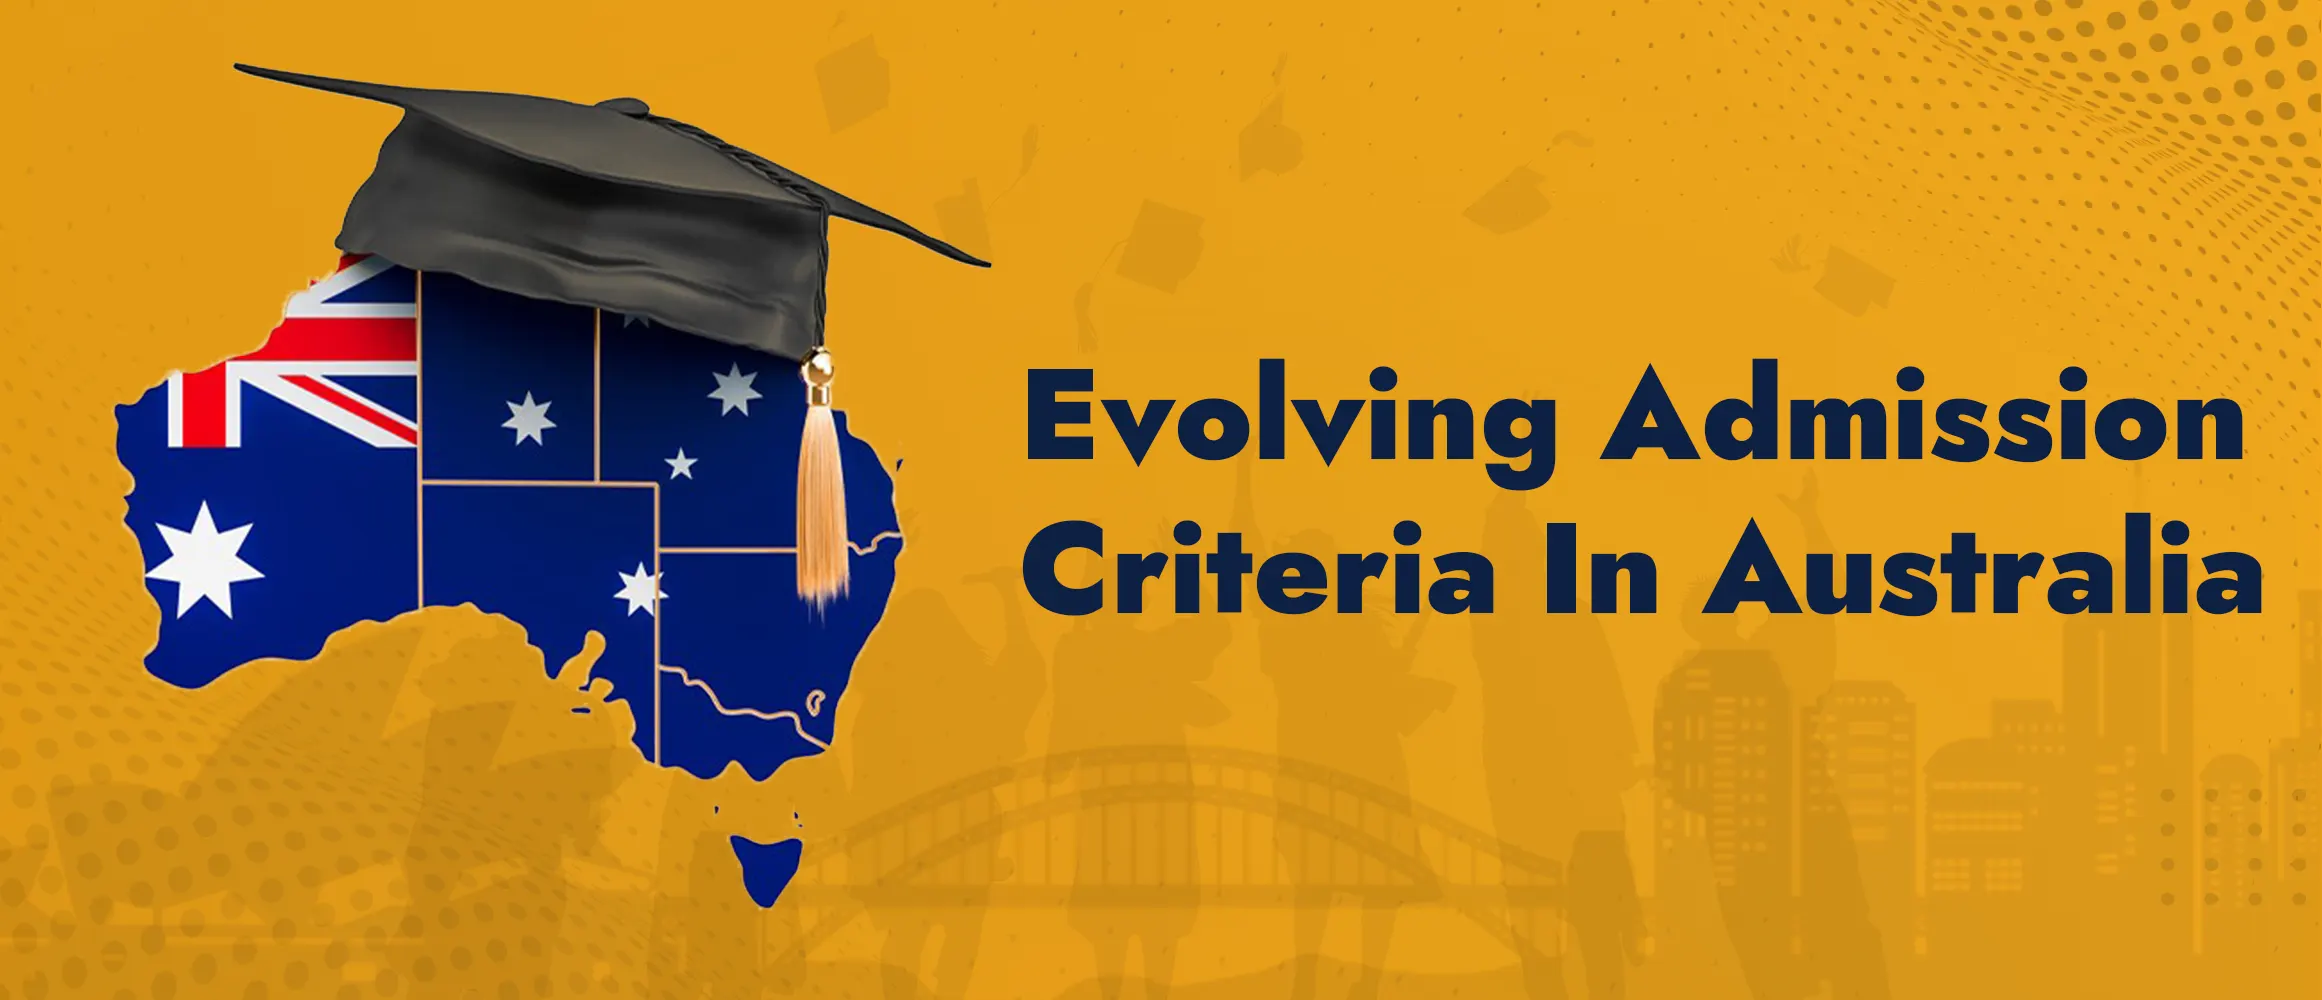 Changes to University Admission Criteria in Australia